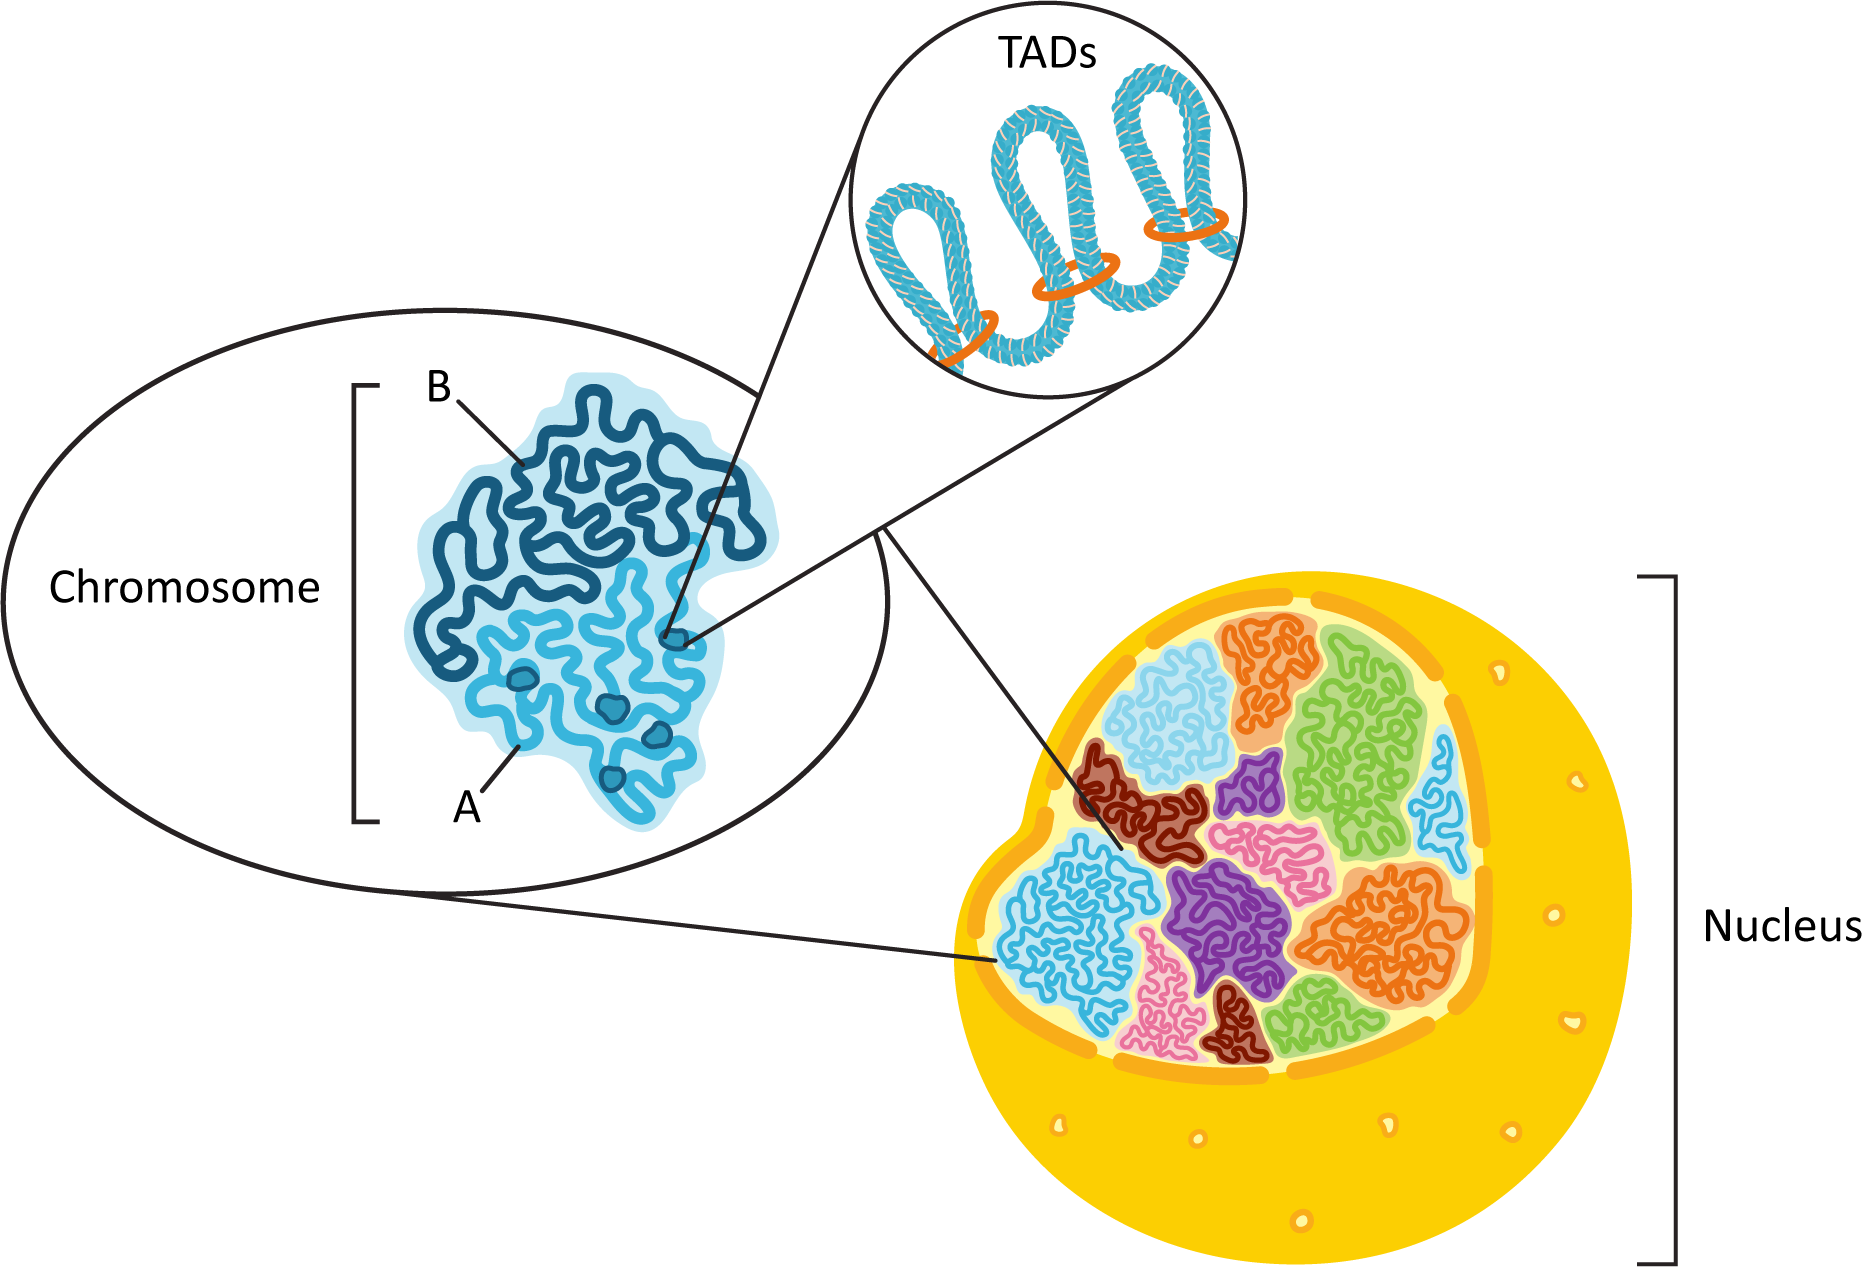 Illustration of Chromosome, TADs, and Nucleus